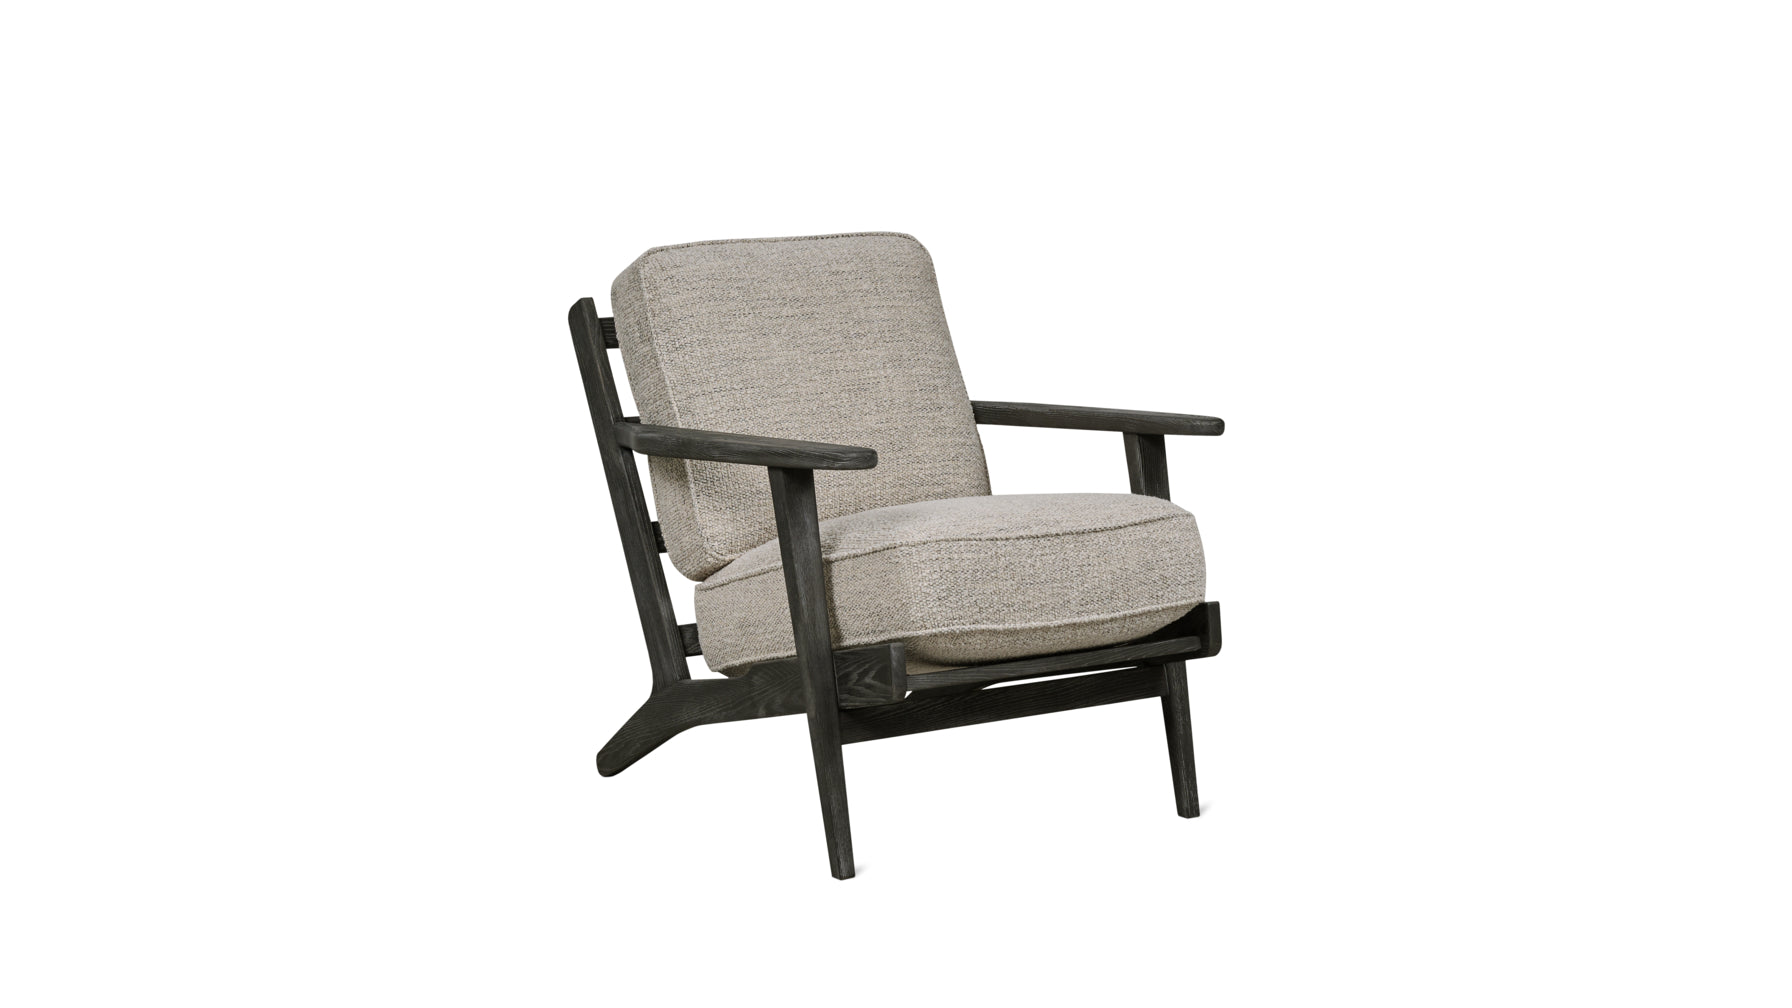 Long Weekend Lounge Chair, Oatmeal - Image 2